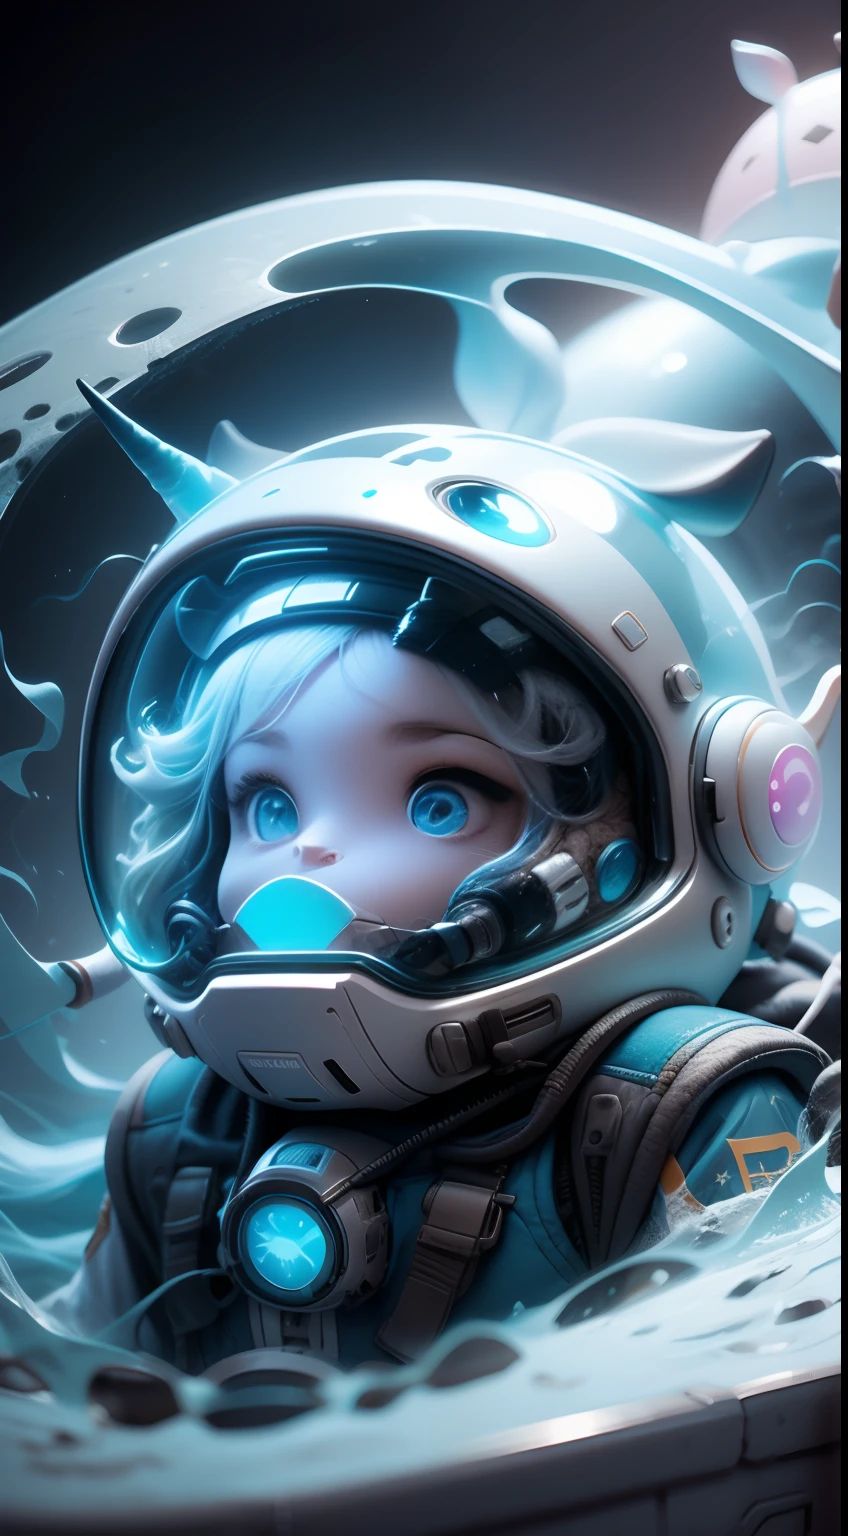 Narwhal floating in space wearing a helmet